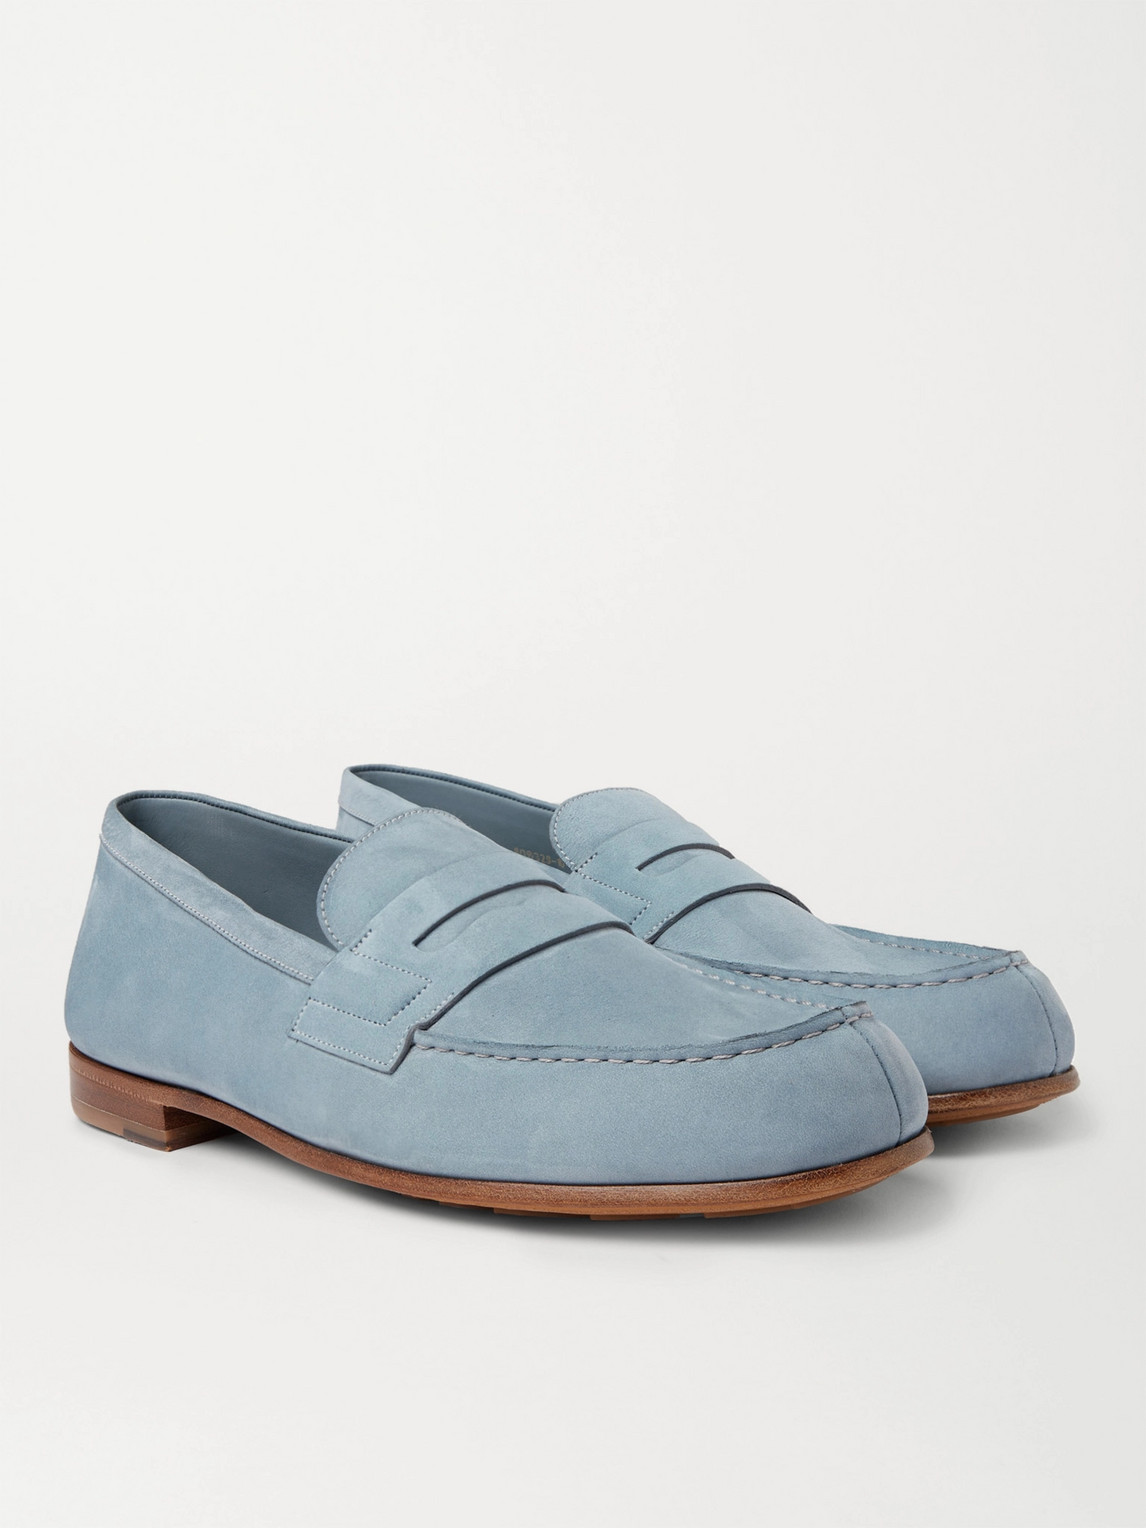 Jm Weston Le Moc D Loafers In Nubuck Leather In Blue